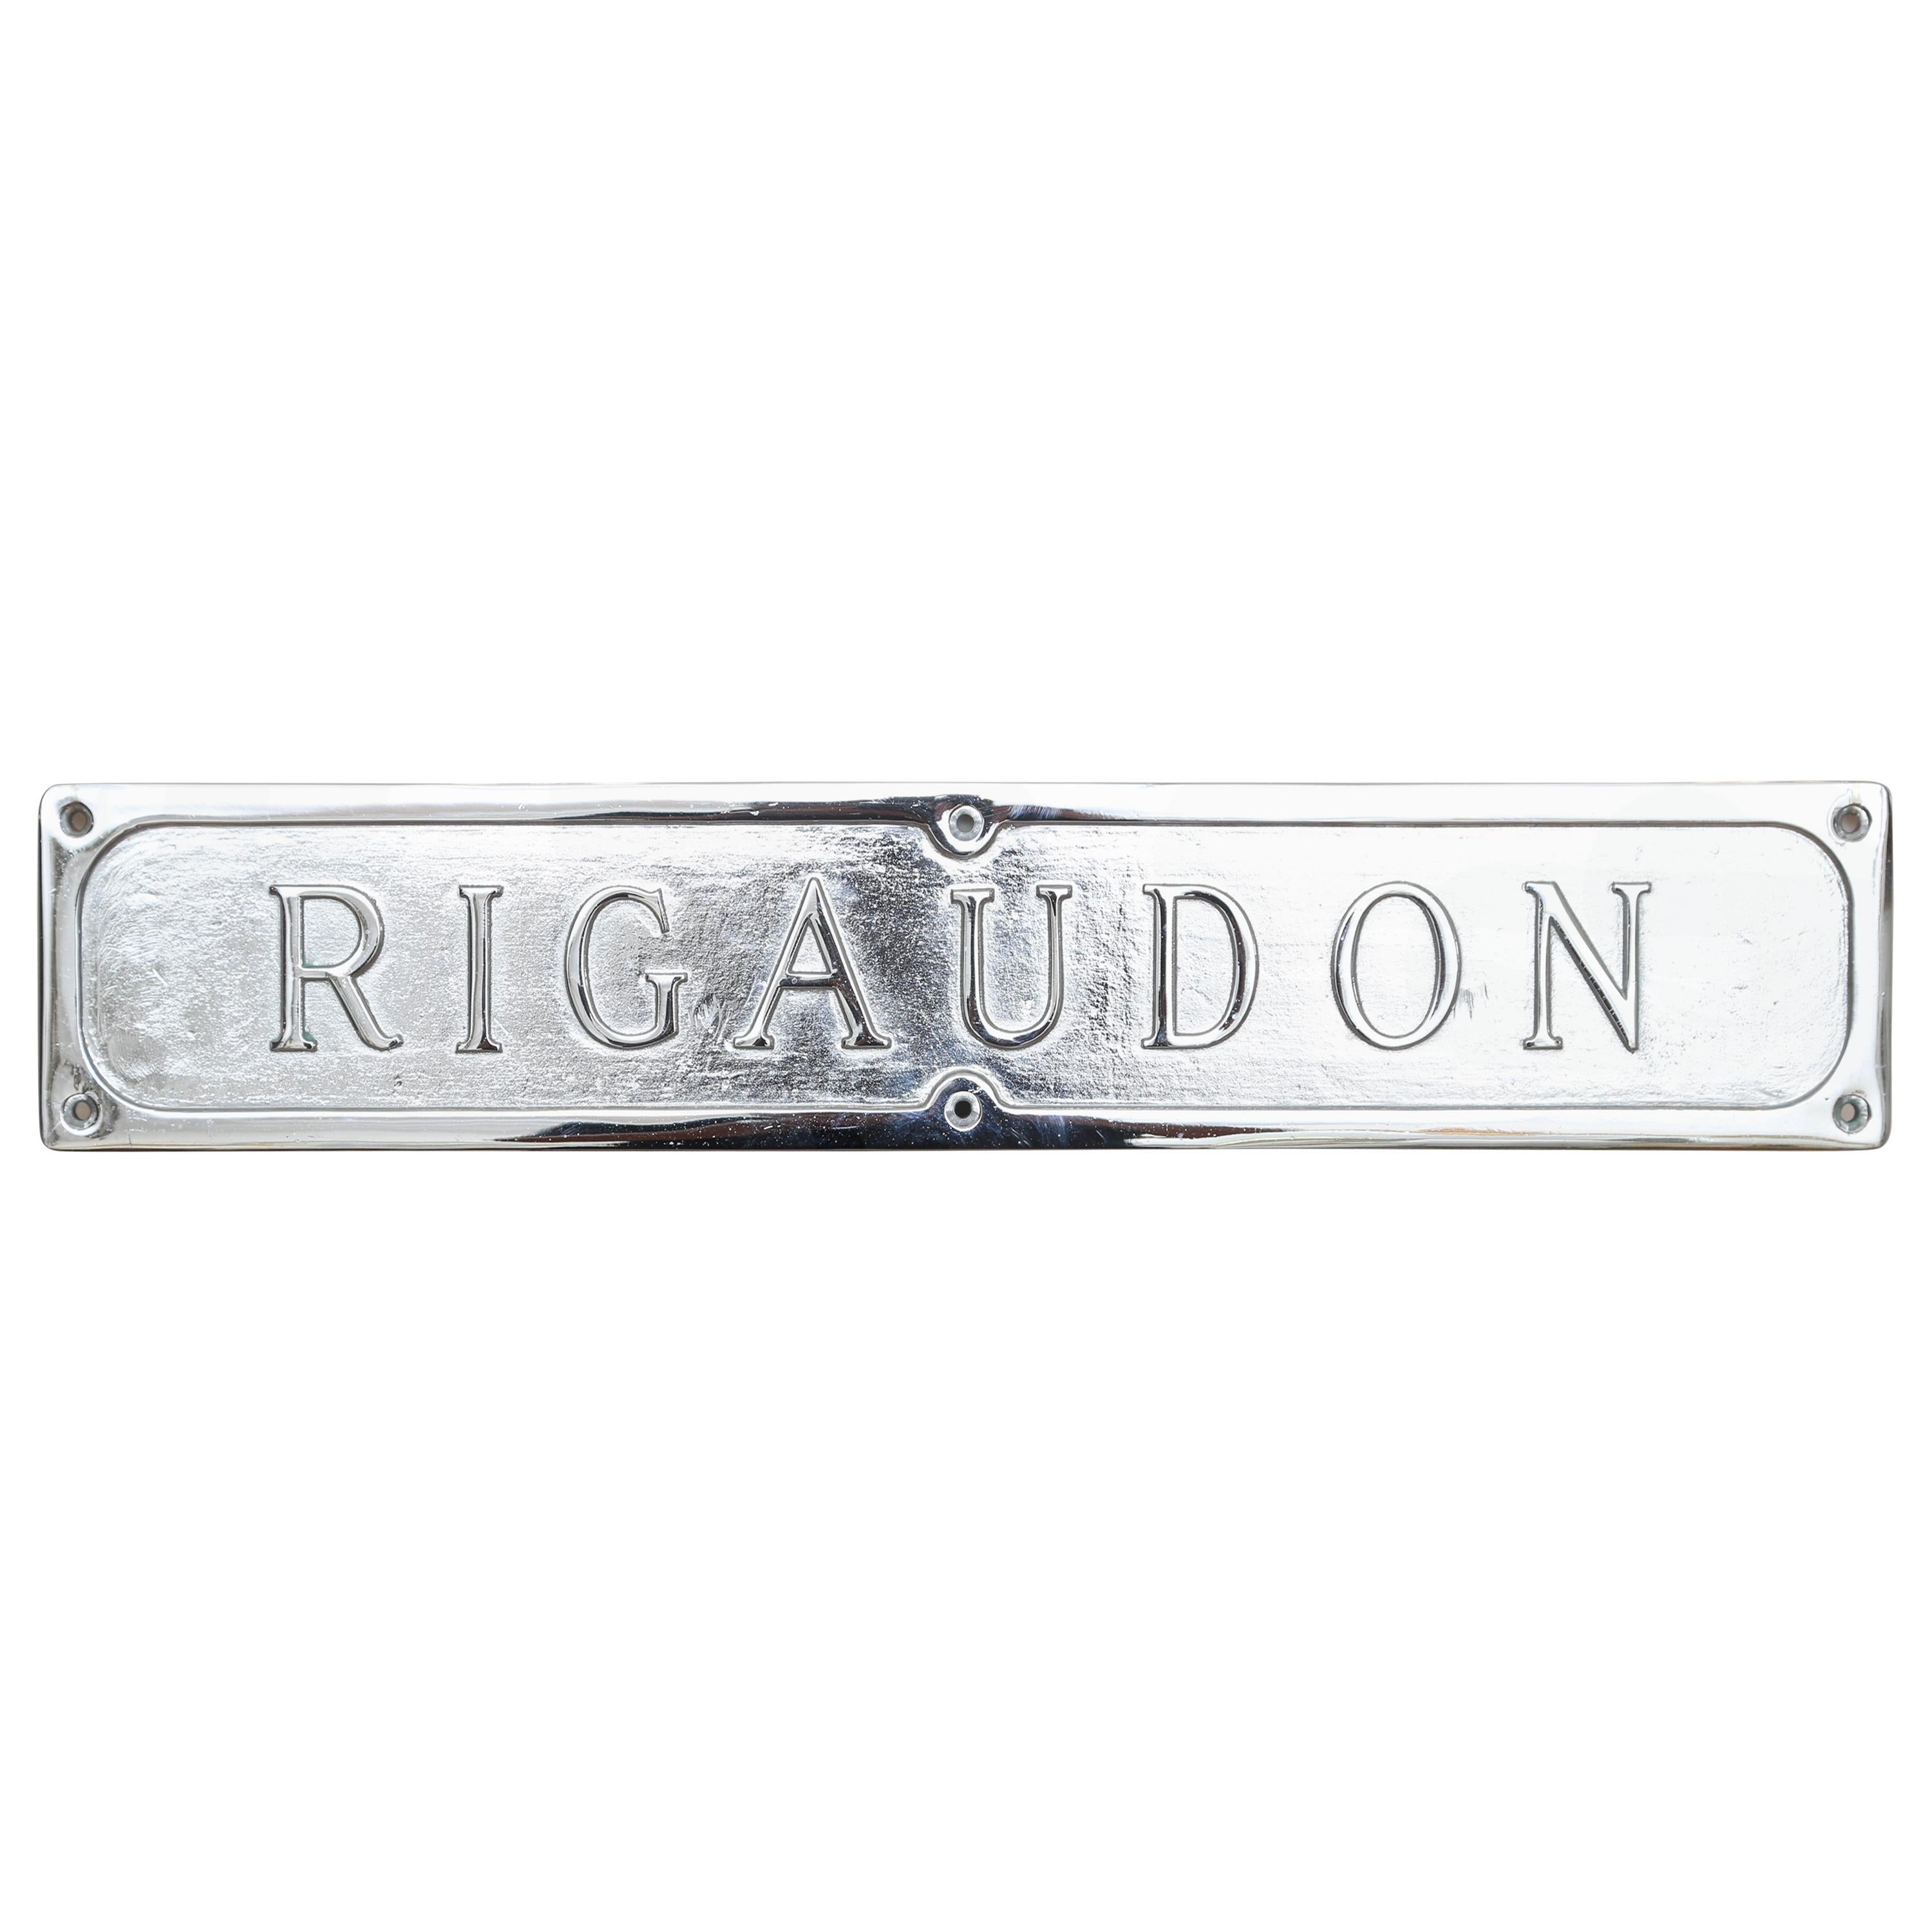 Signature française "Rigaudon"